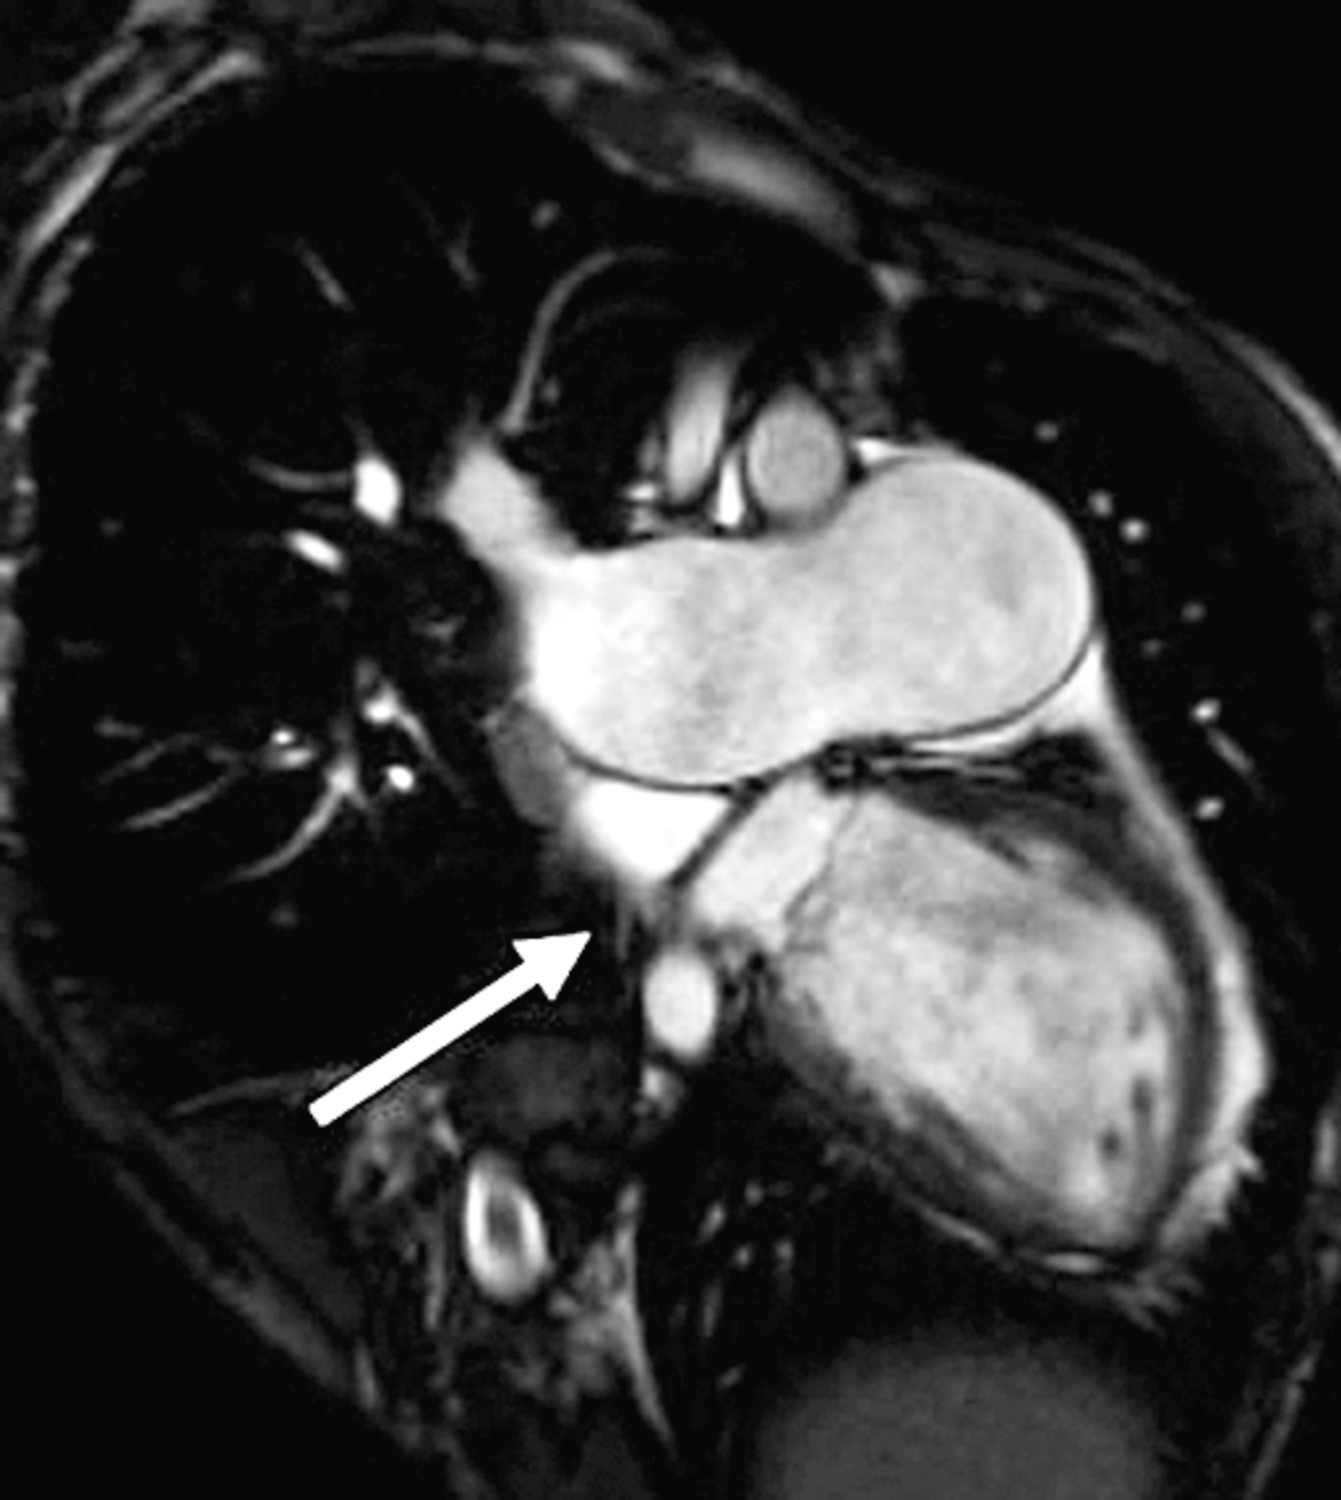 Cœur triatrial et syndrome coronarien aigu - Figure 4